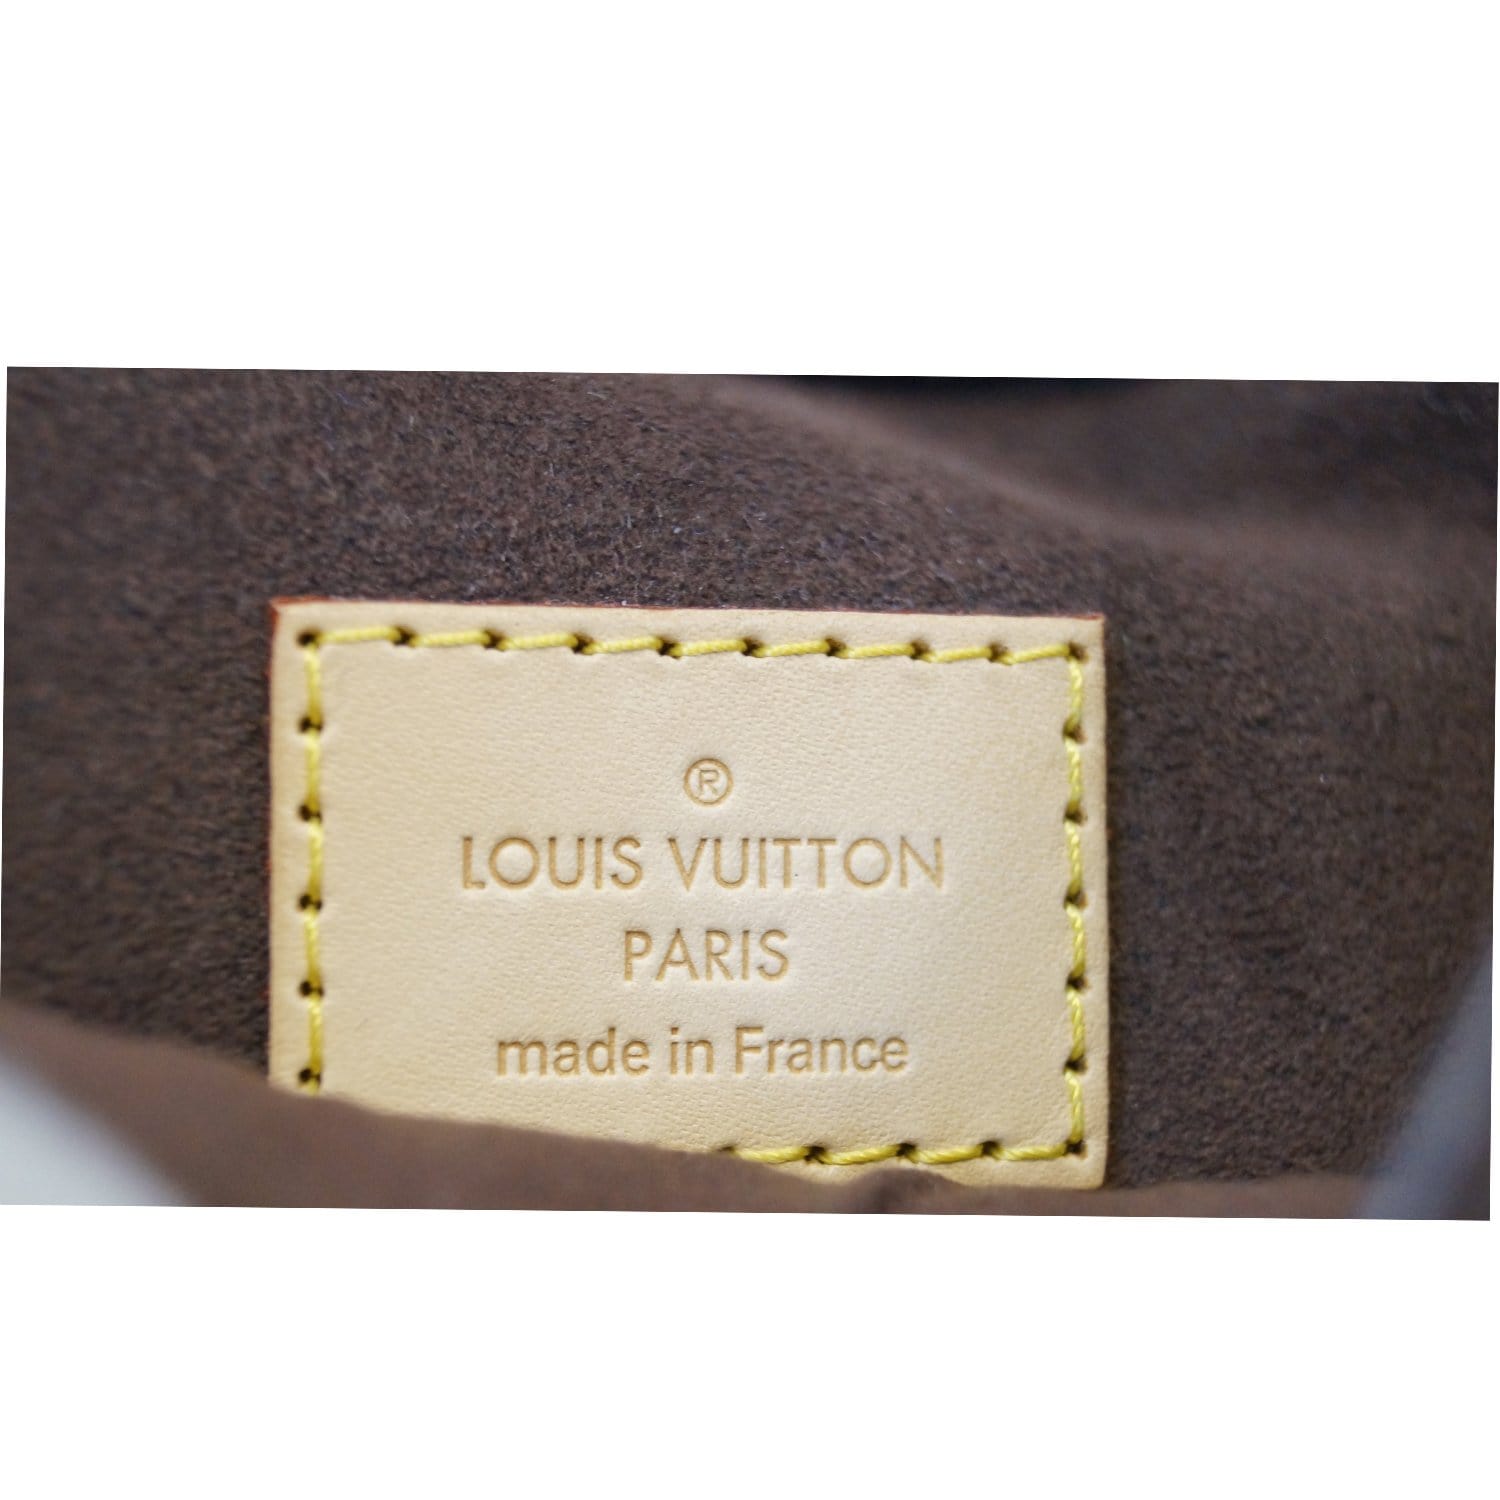 ❤️REVIEW - Louis Vuitton Metis Hobo 